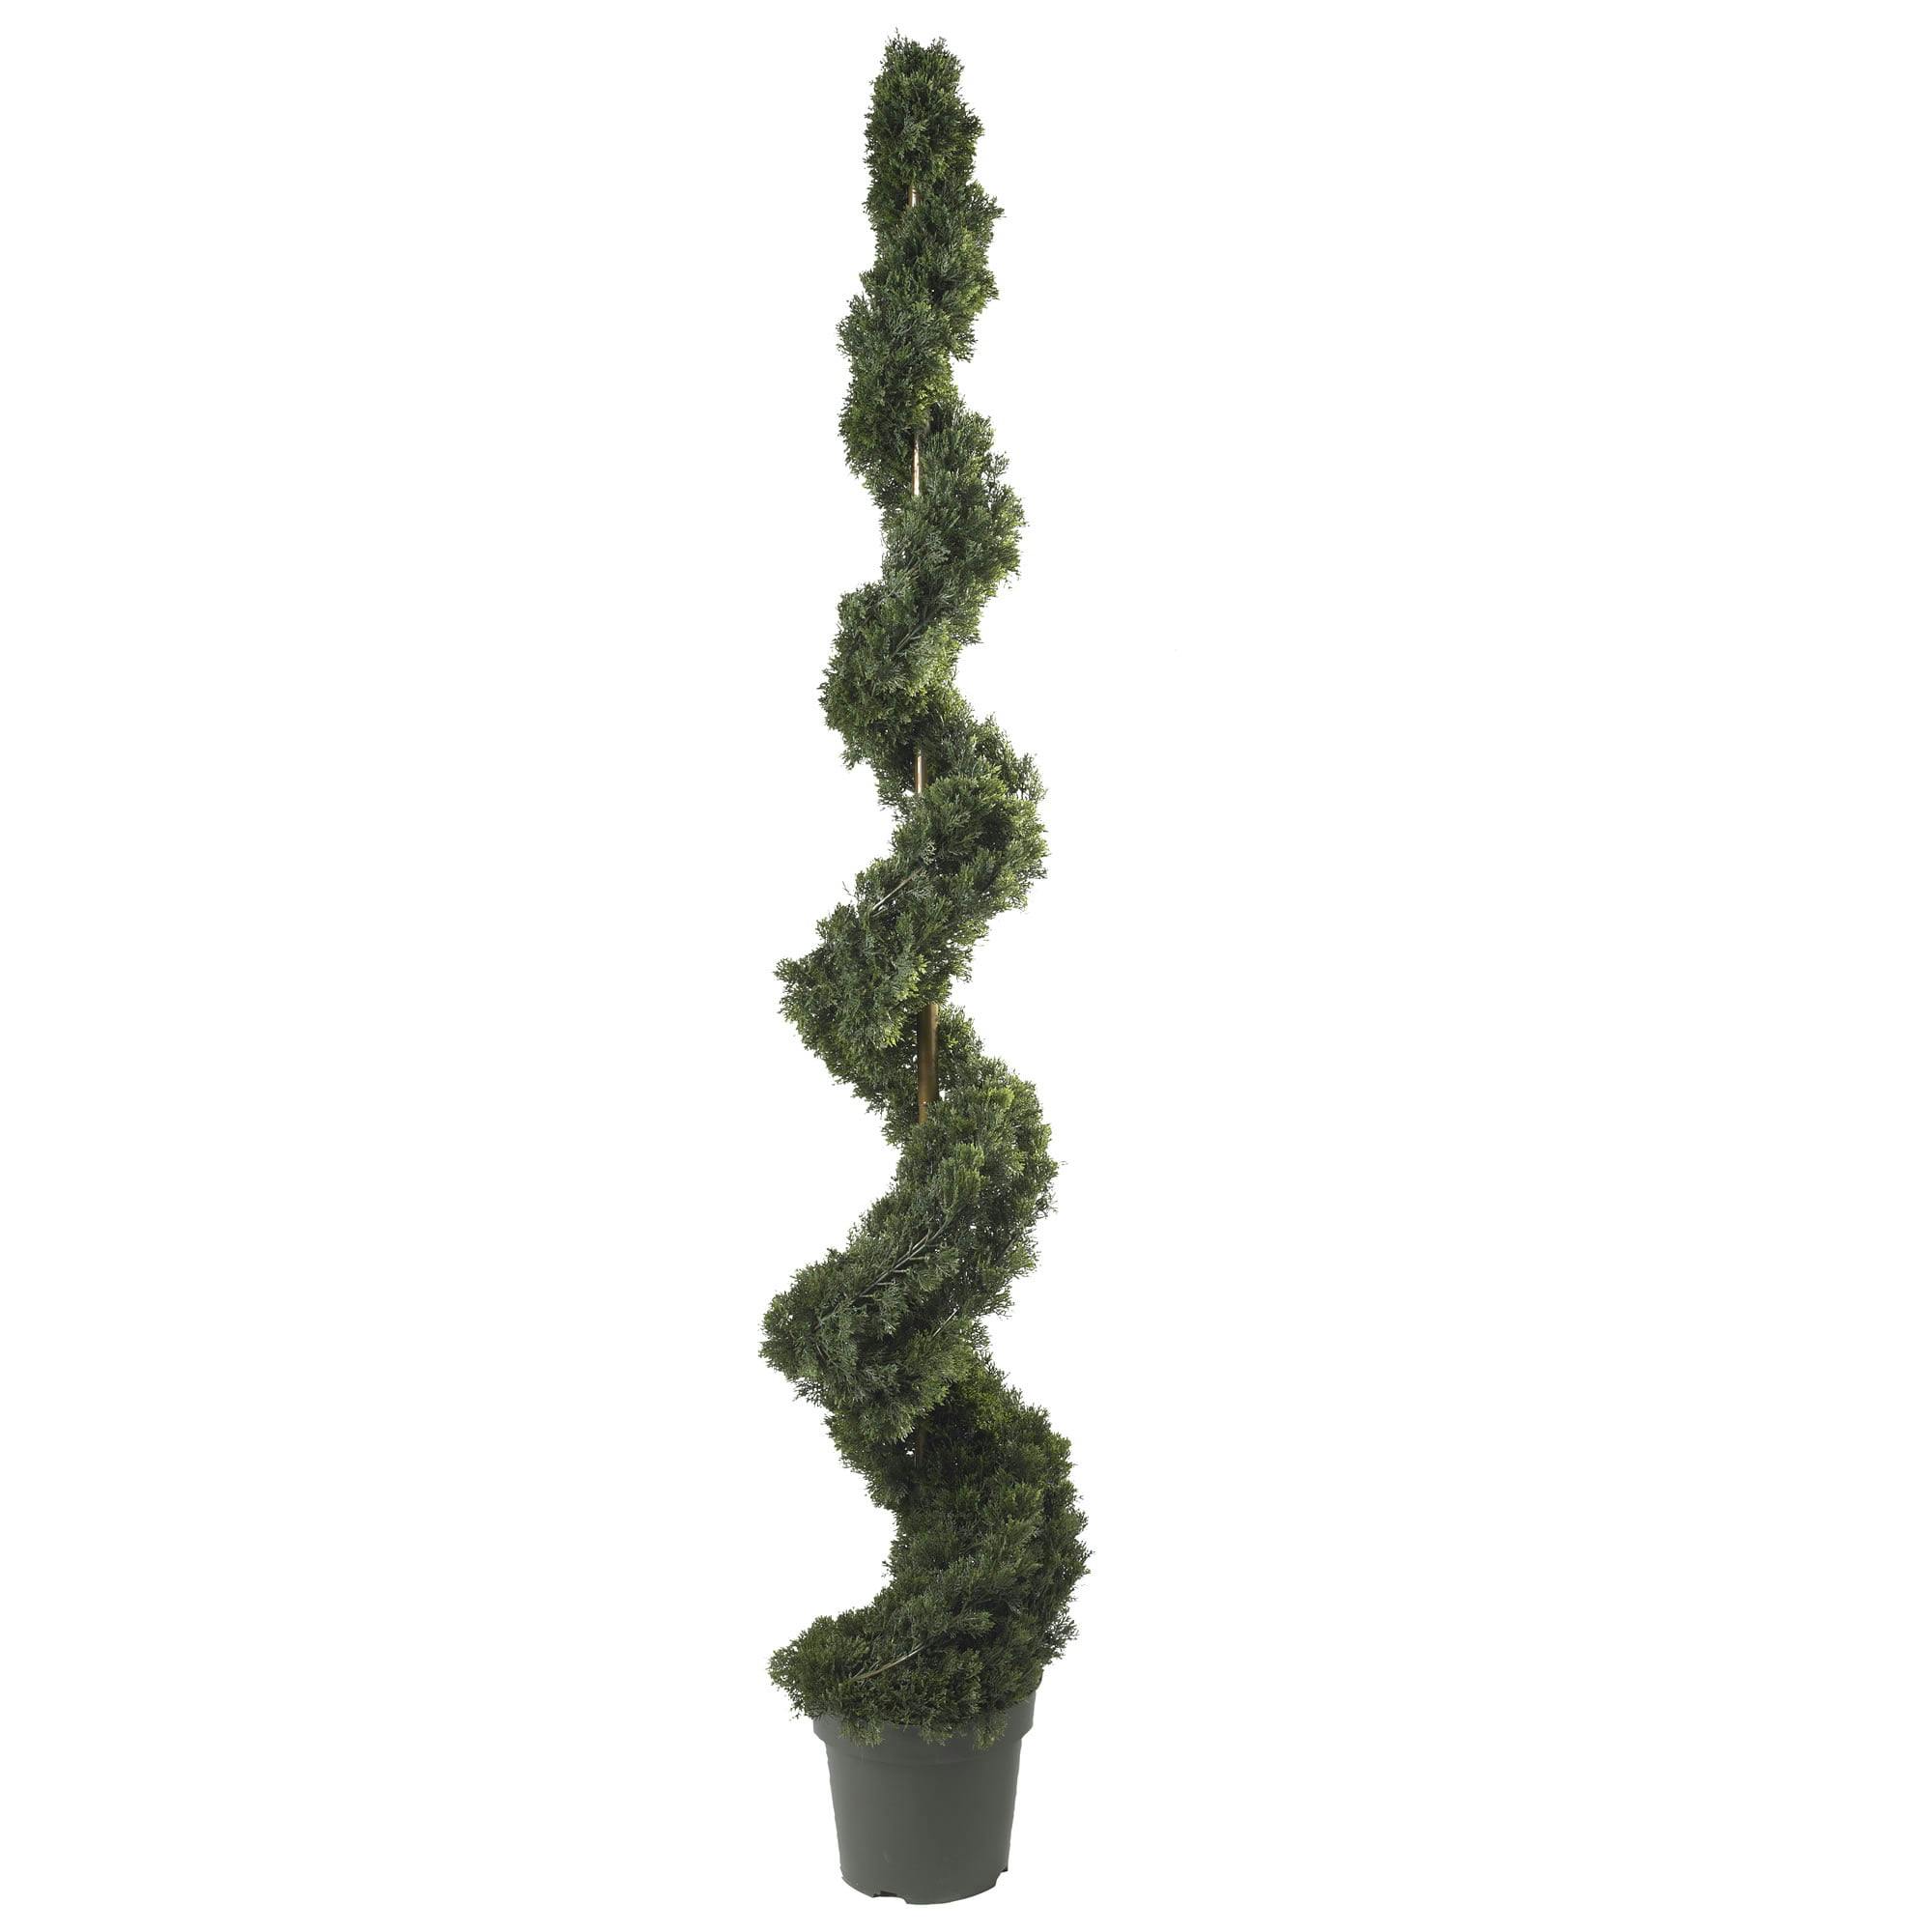 Majestic Spiral Cedar Silk Topiary in Pot - 44" Outdoor